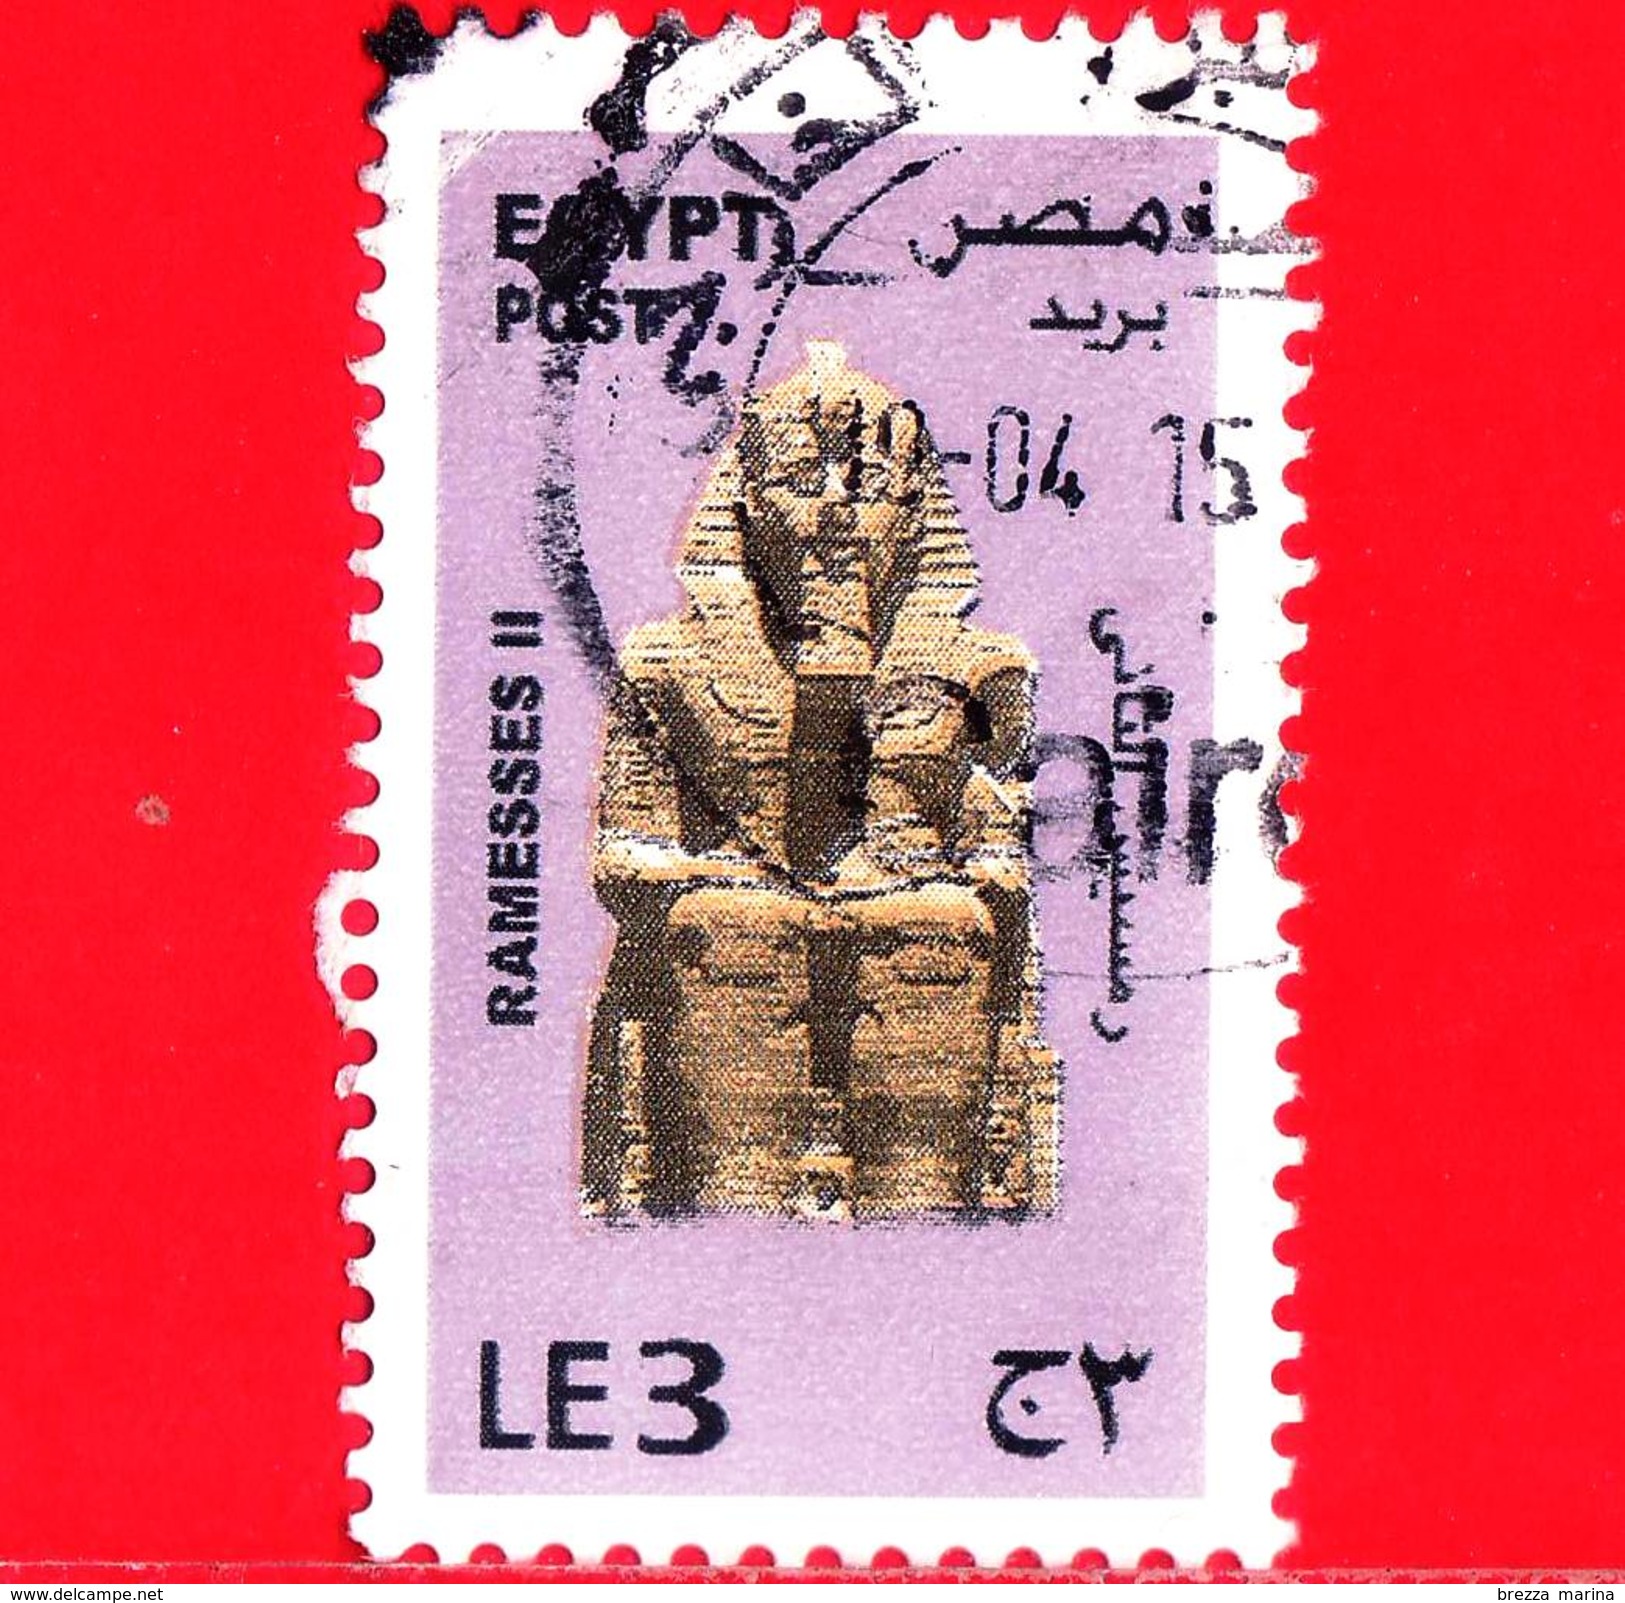 EGITTO - Usato - 2013 - Archeologia - Faraone Ramses II - 3 - Usados